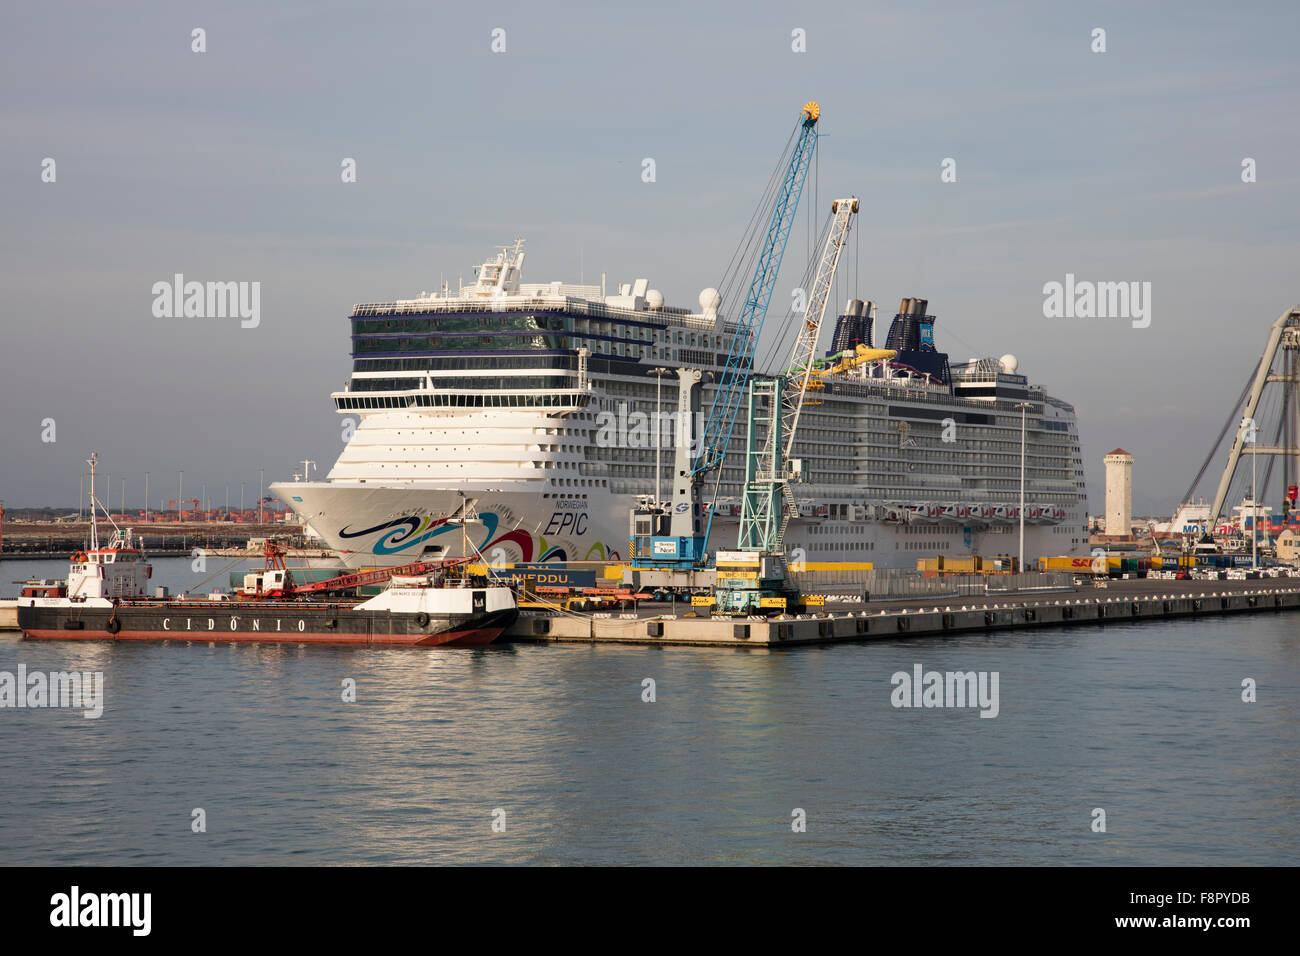 NCL cruise ship 'Norwegian Epic' berthed at Civitavecchia harbor Italy Stock Photo